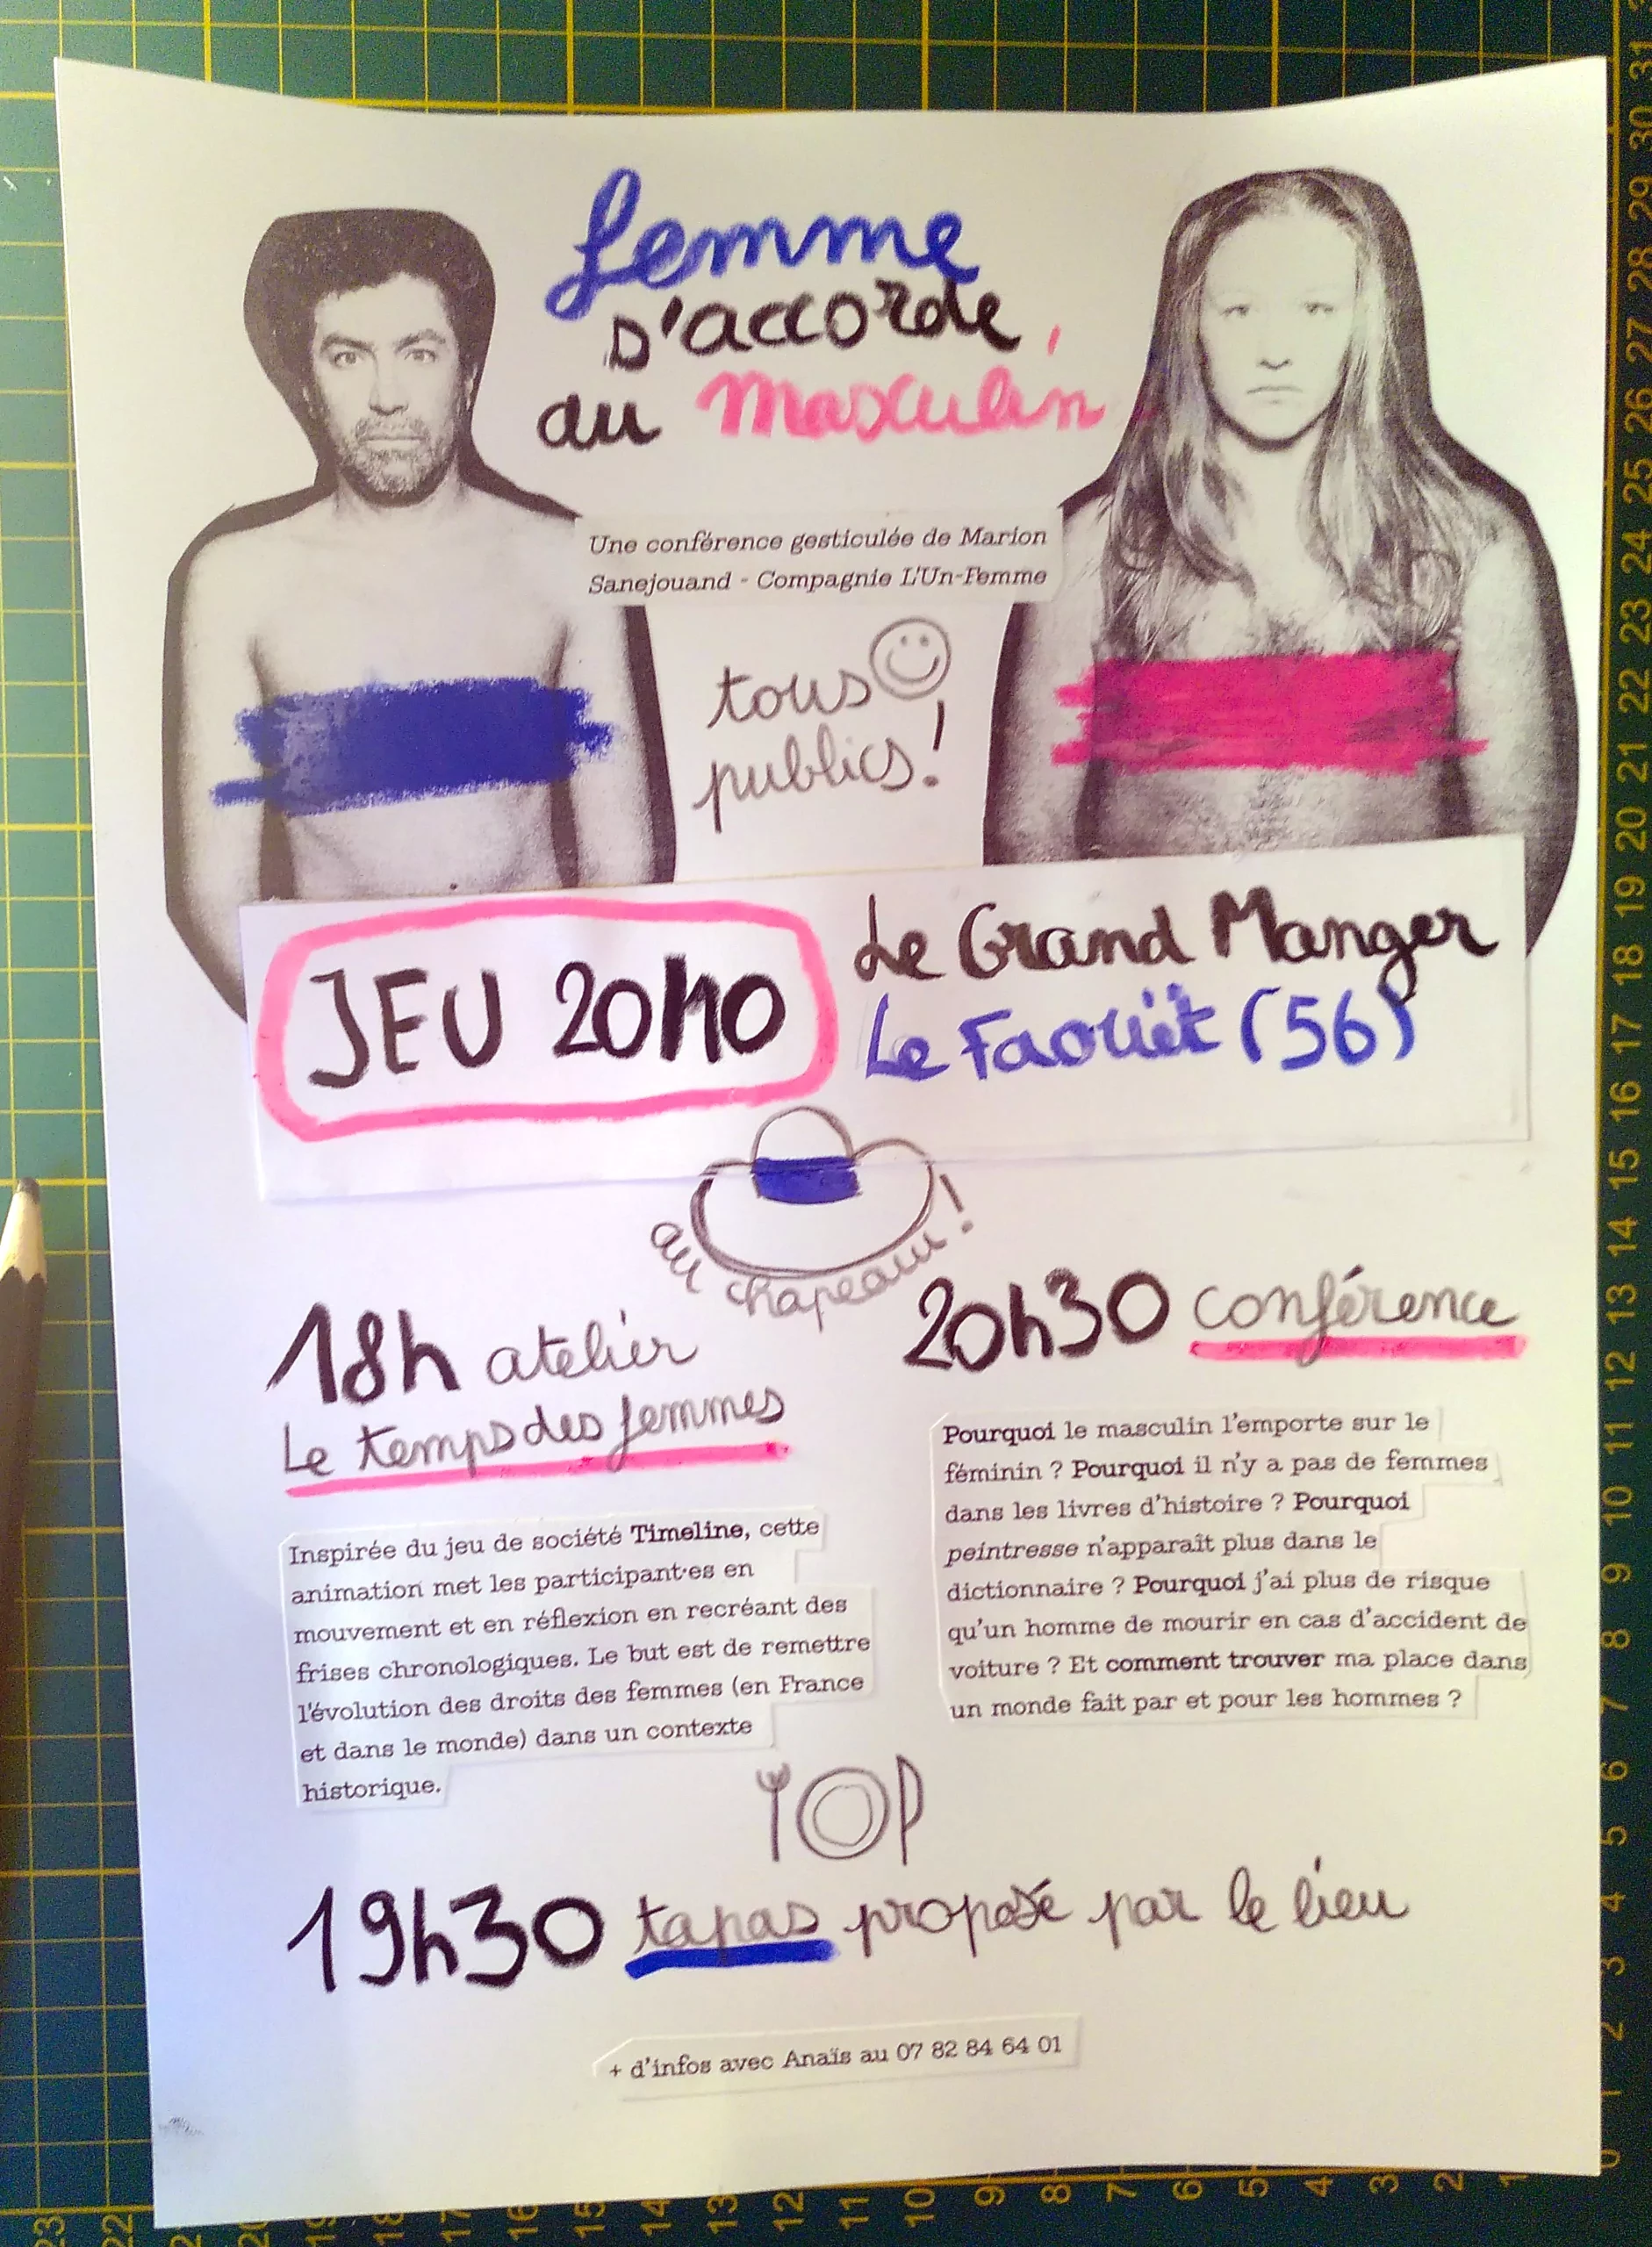 Affiche 20/10 - Conférence gesticulée "Femme s'accorde au masculin"